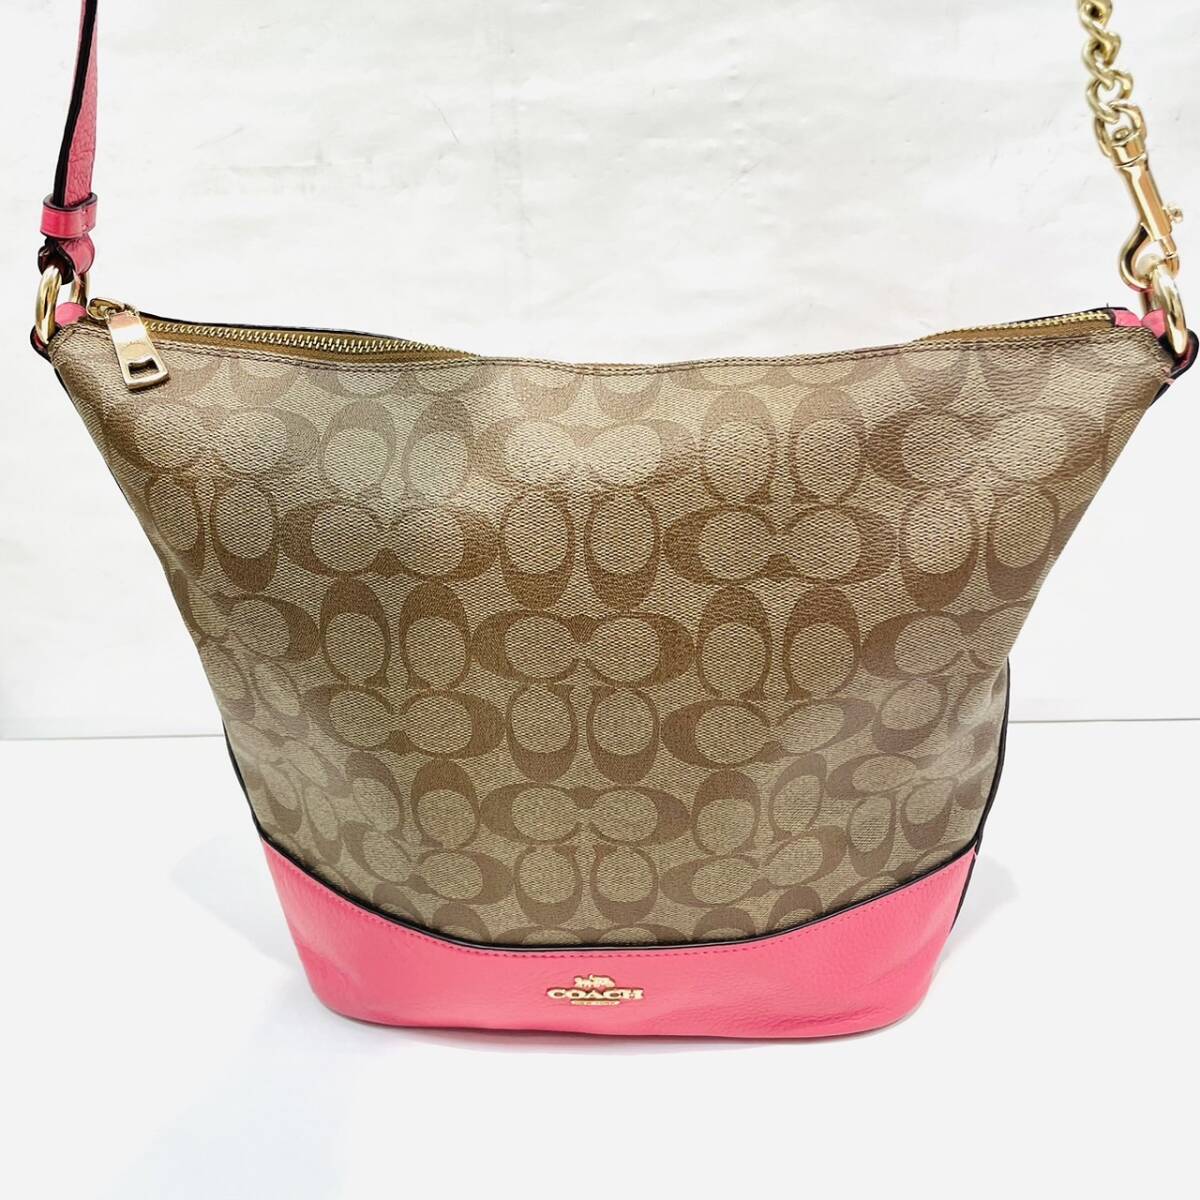 [B14100KM]COACH Coach F72852 signature shoulder bag Gold color metal fittings pink PVC handbag bucket type 2WAY charm less 